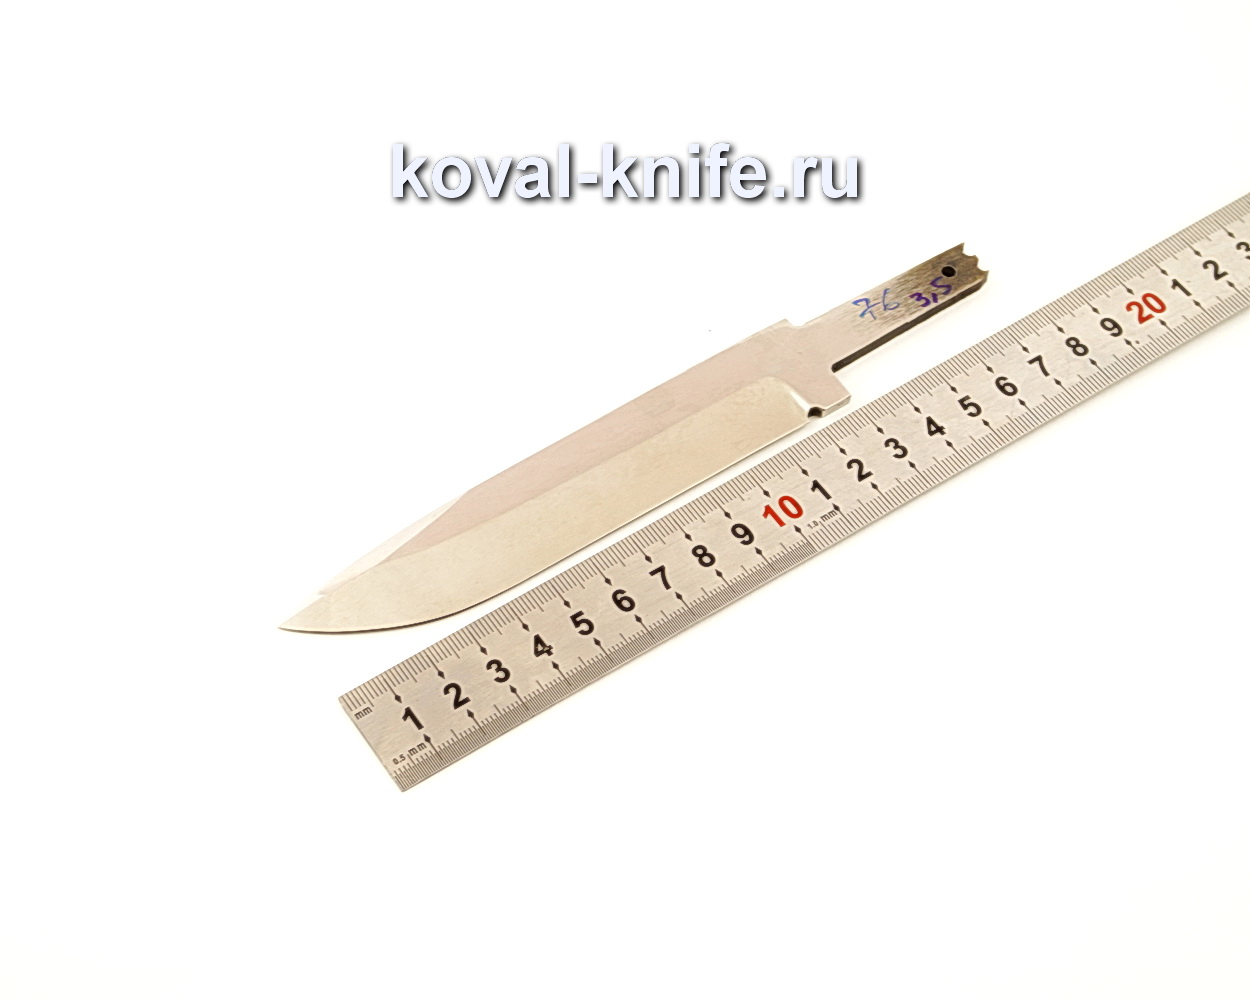 Клинок для ножа из кованой 110Х18 МШД N76